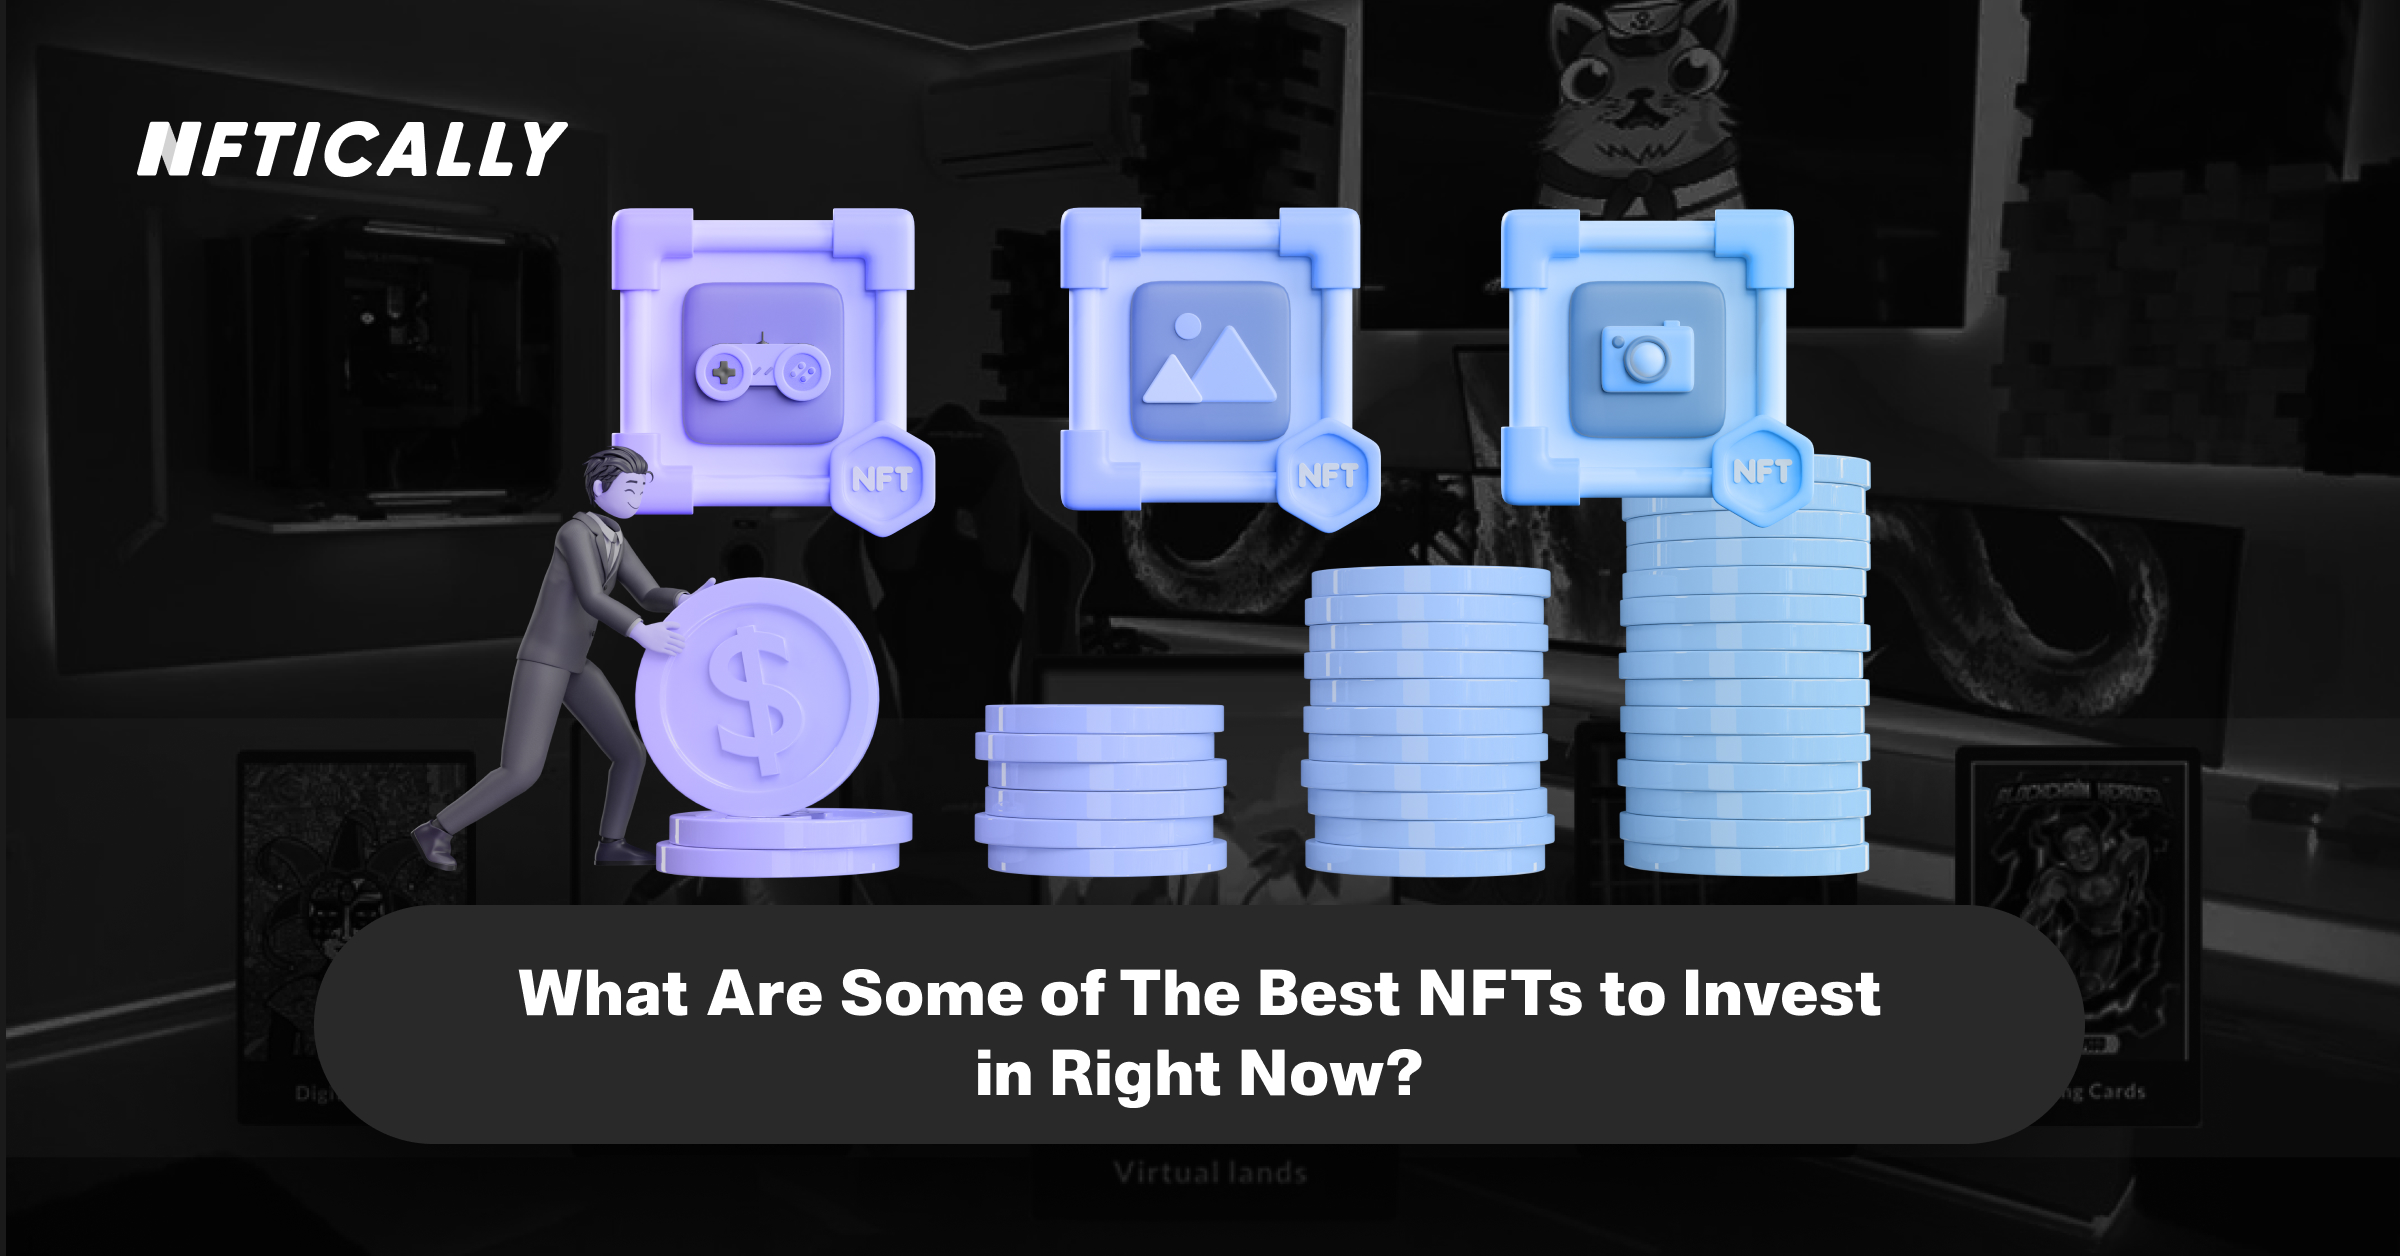 ¿Cuáles son las mejores NFT para invertir en este momento?